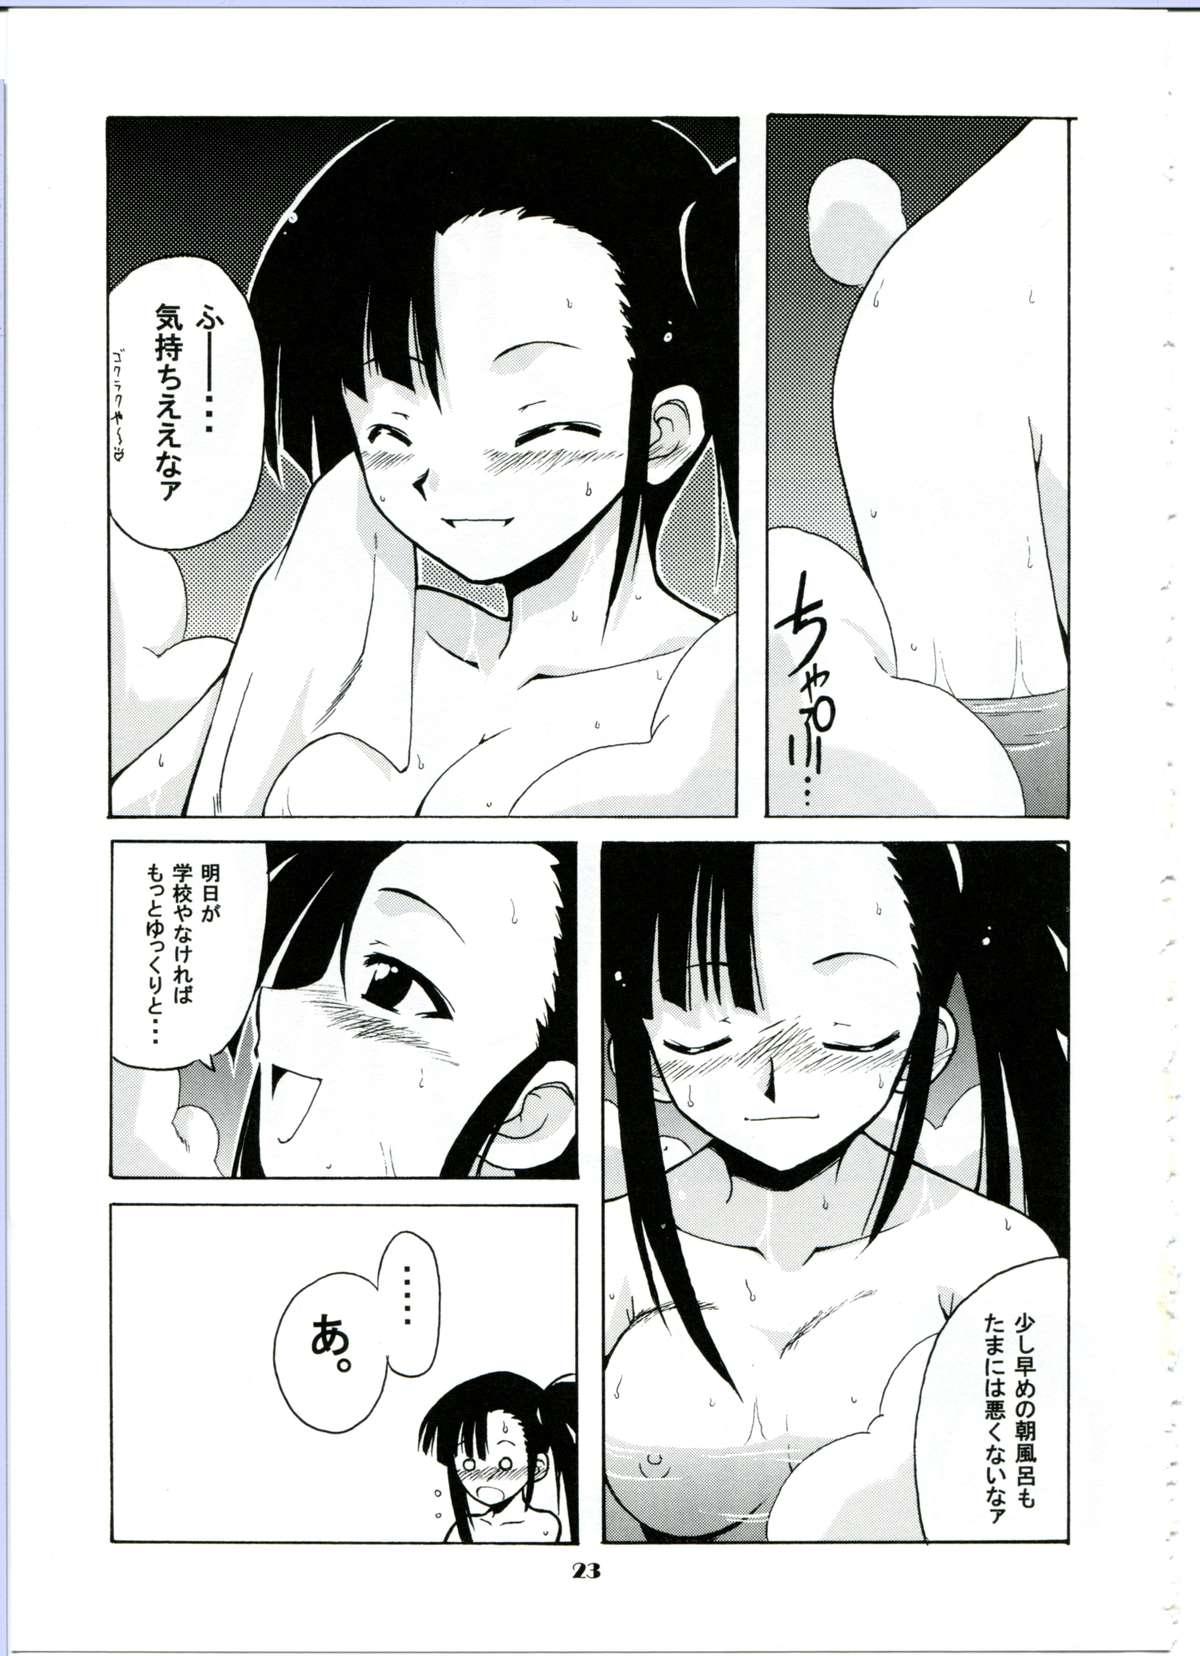 Gay Shaved if CODE:02 - Mahou sensei negima Small - Page 23